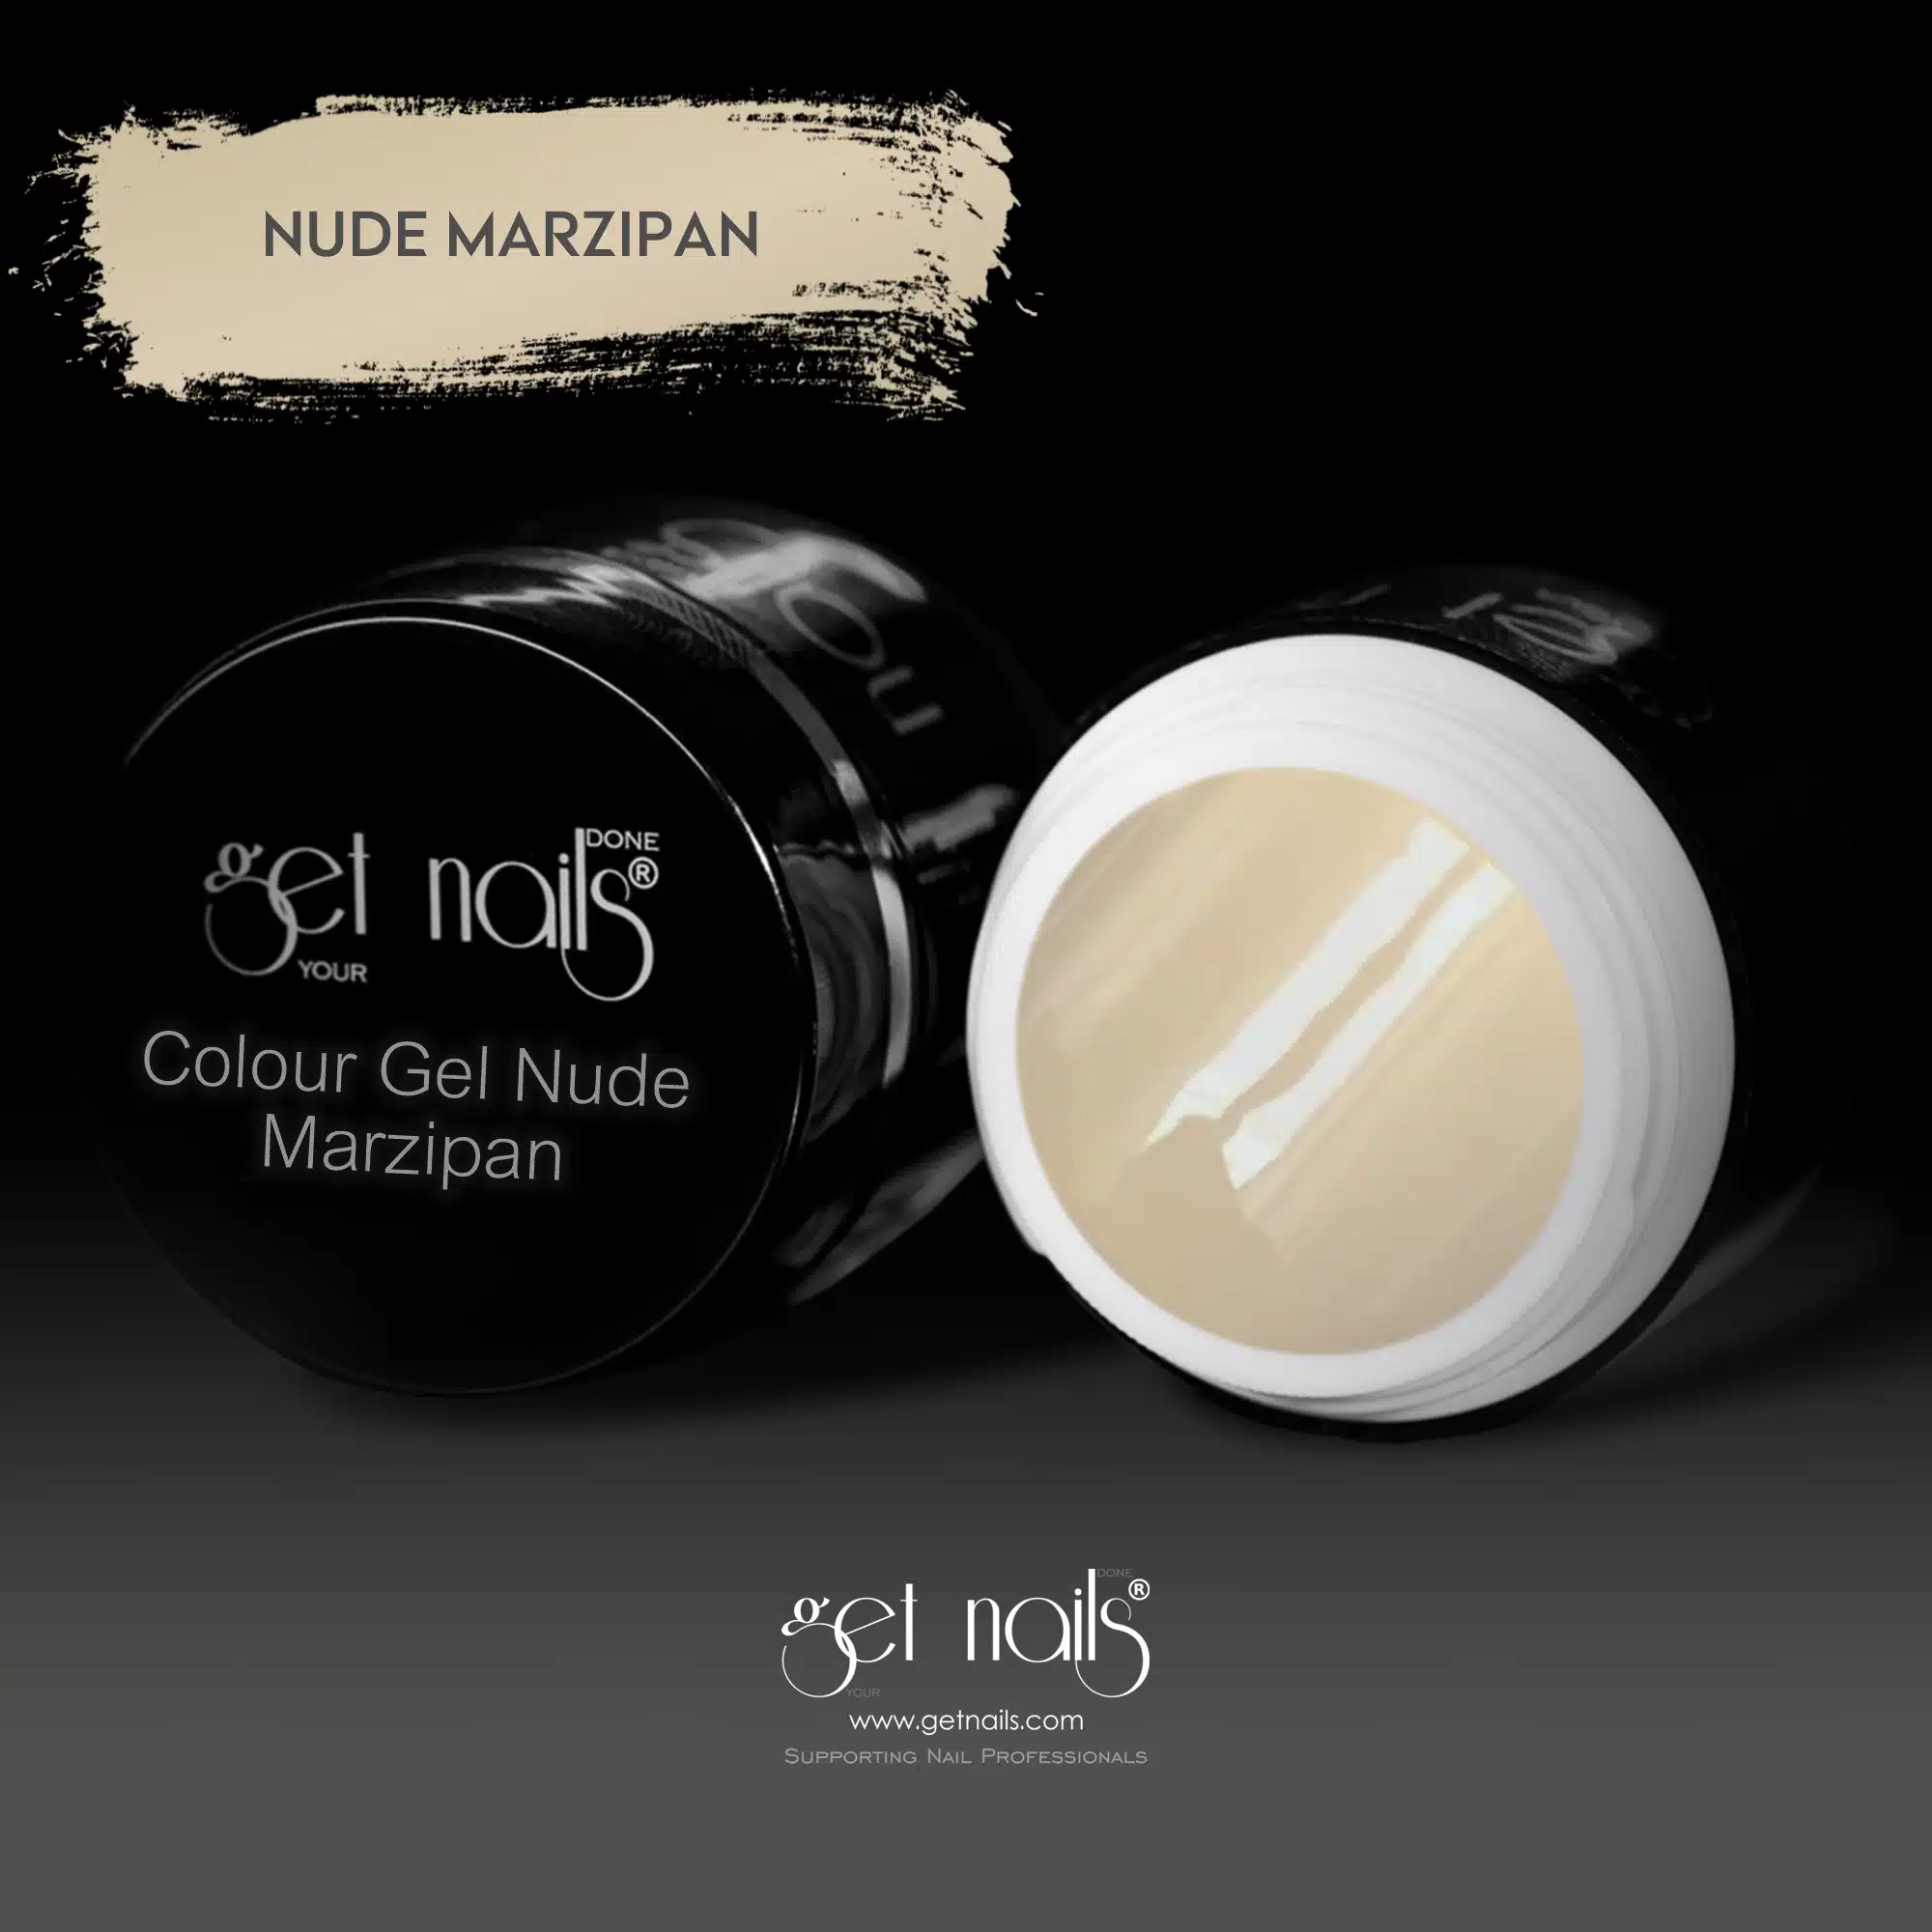 Get Nails Austria - Colour Gel Nude Marzipan 5g